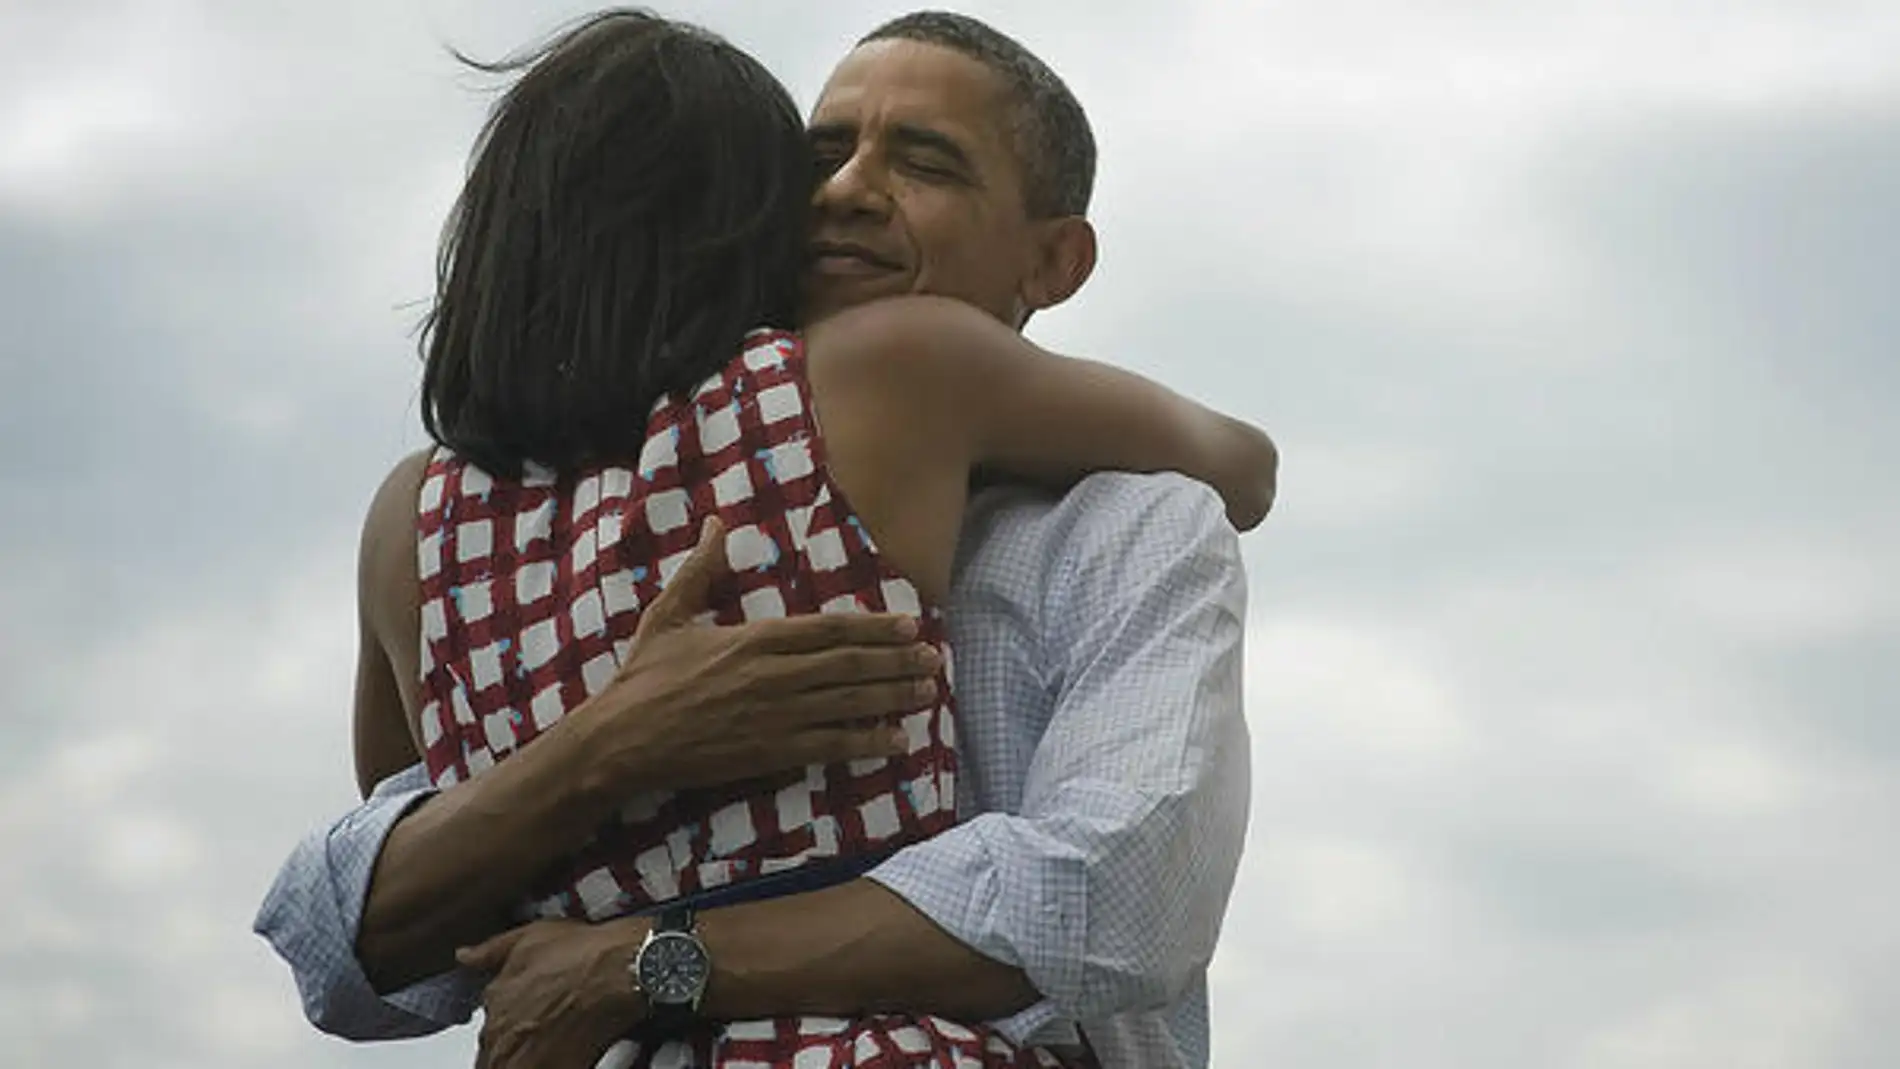 Obama se abraza a su mujer en una imagen que revolucionó Twitter